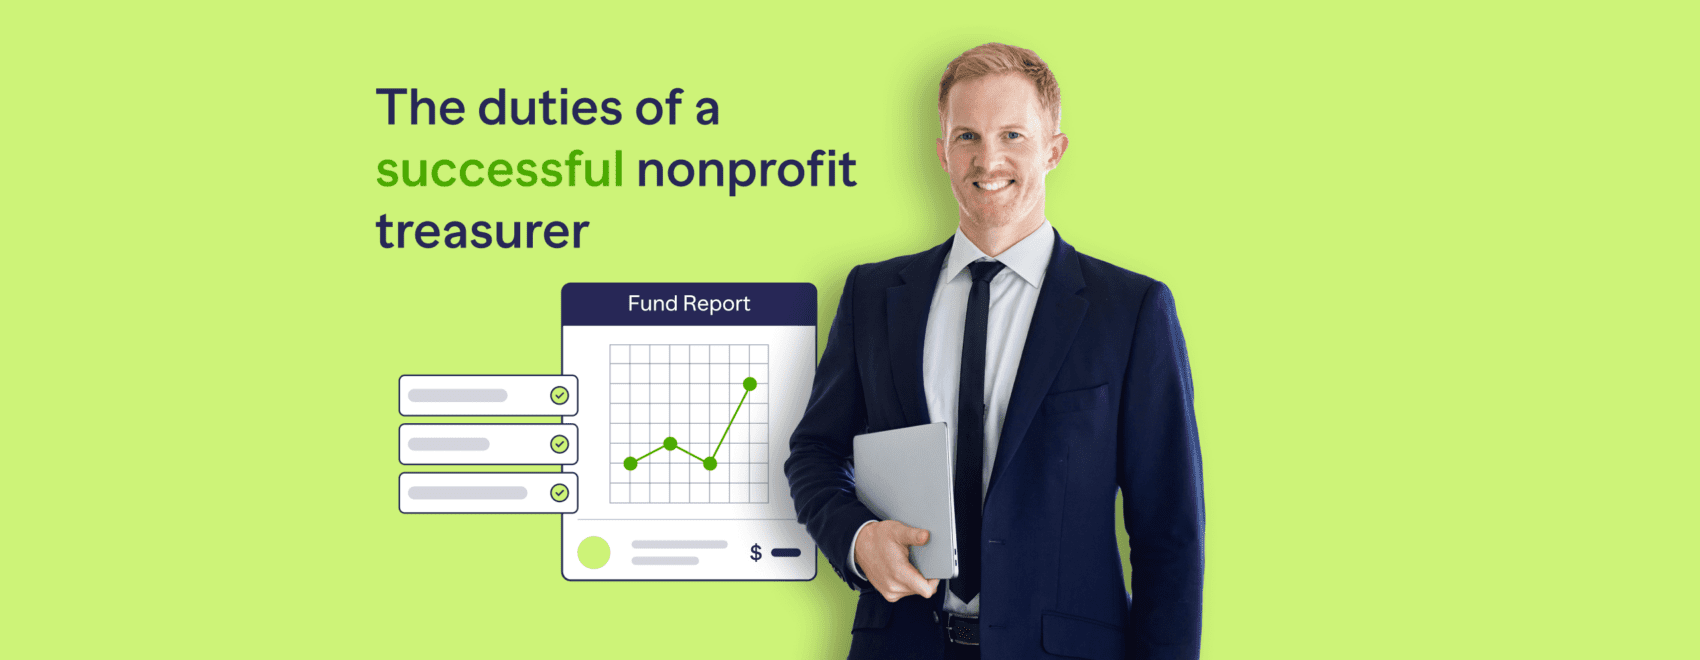 The duties of a successful nonprofit treasurer